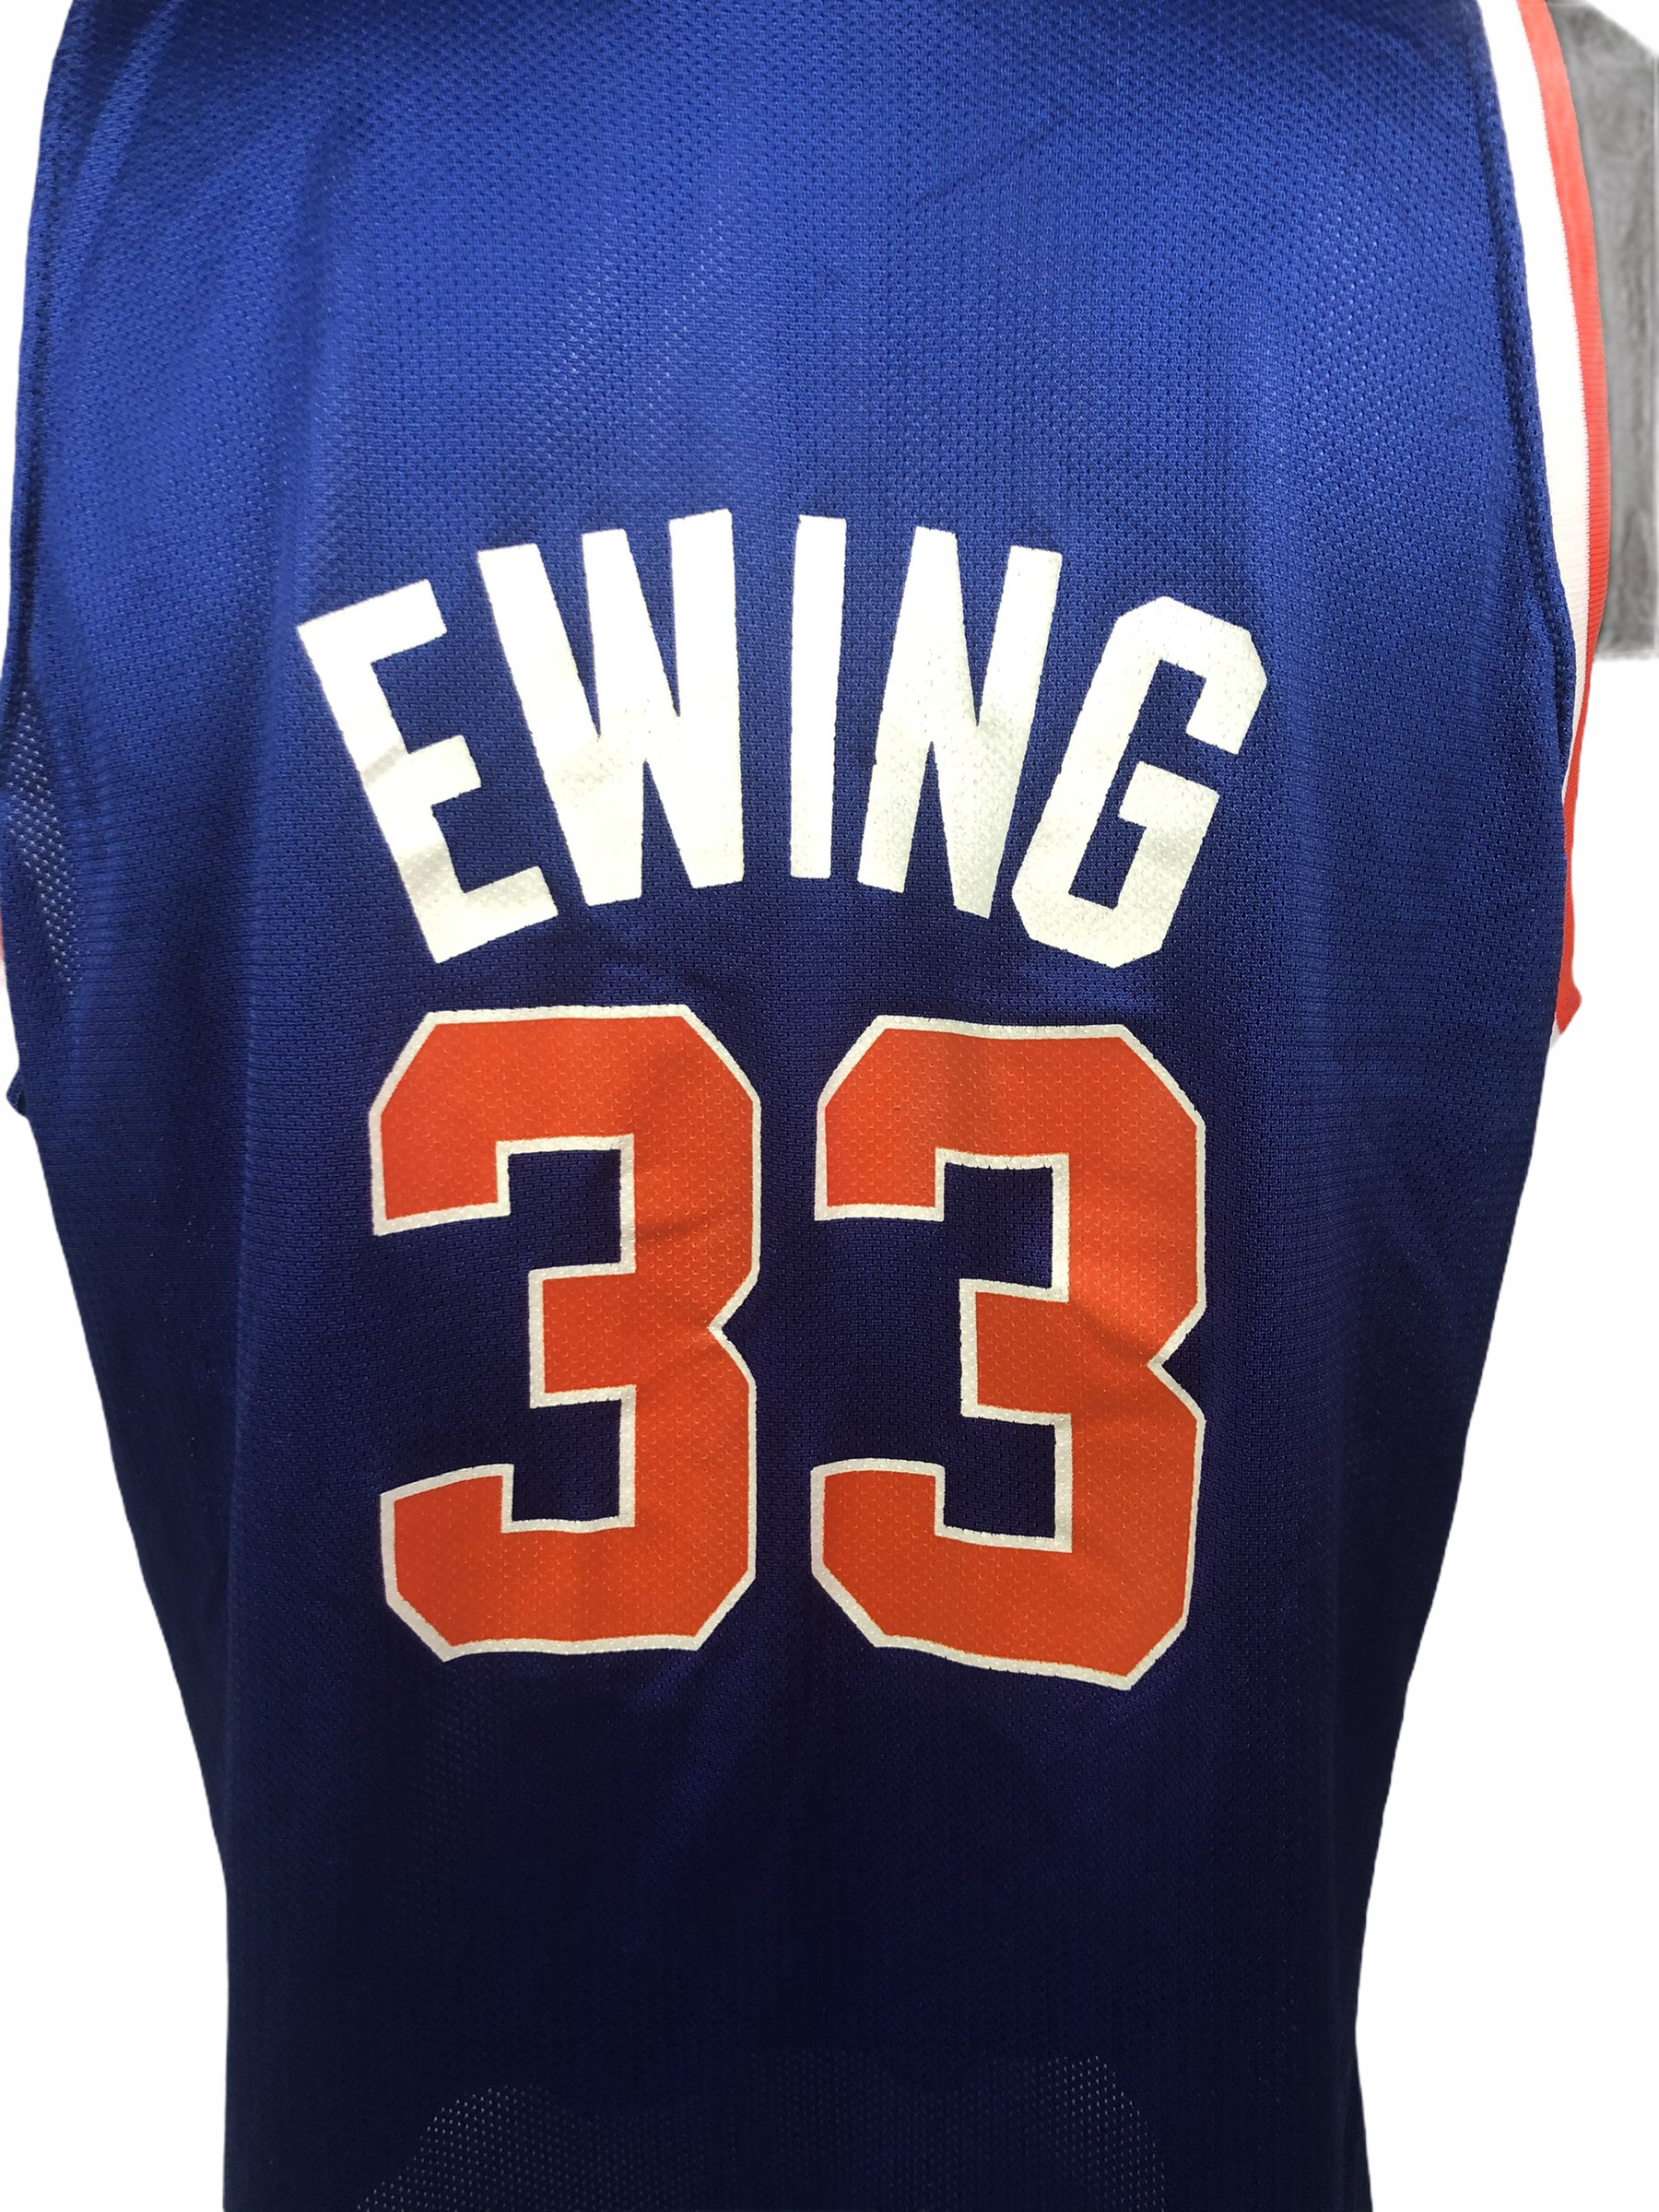 New York Knicks Jersey - 33 Patrick Ewing